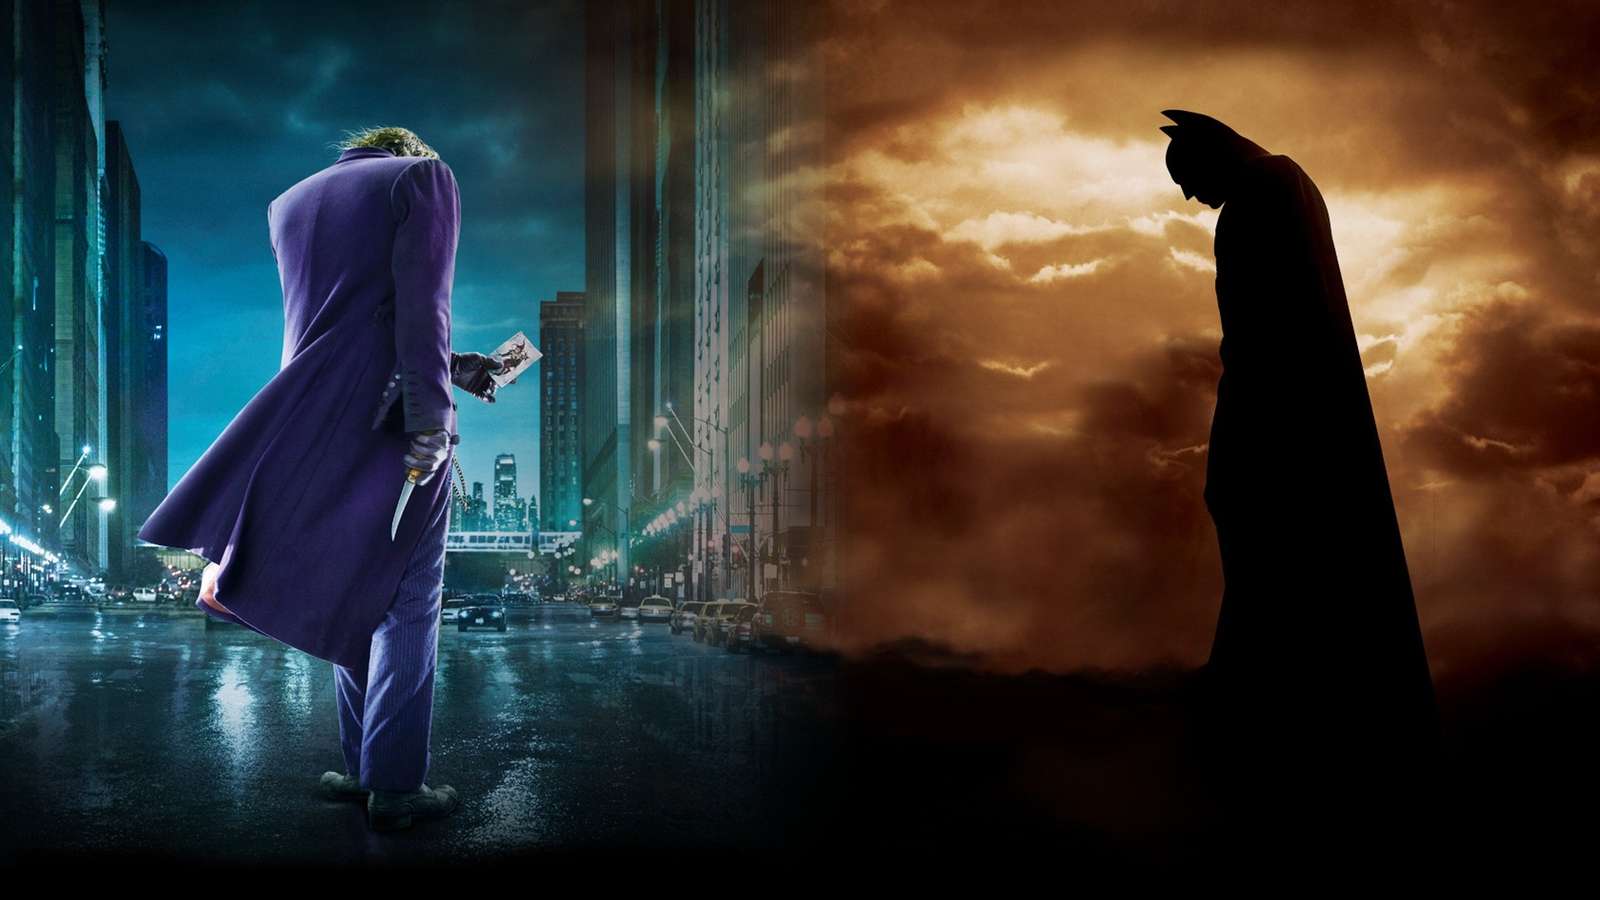 Joker vs Batman online puzzle